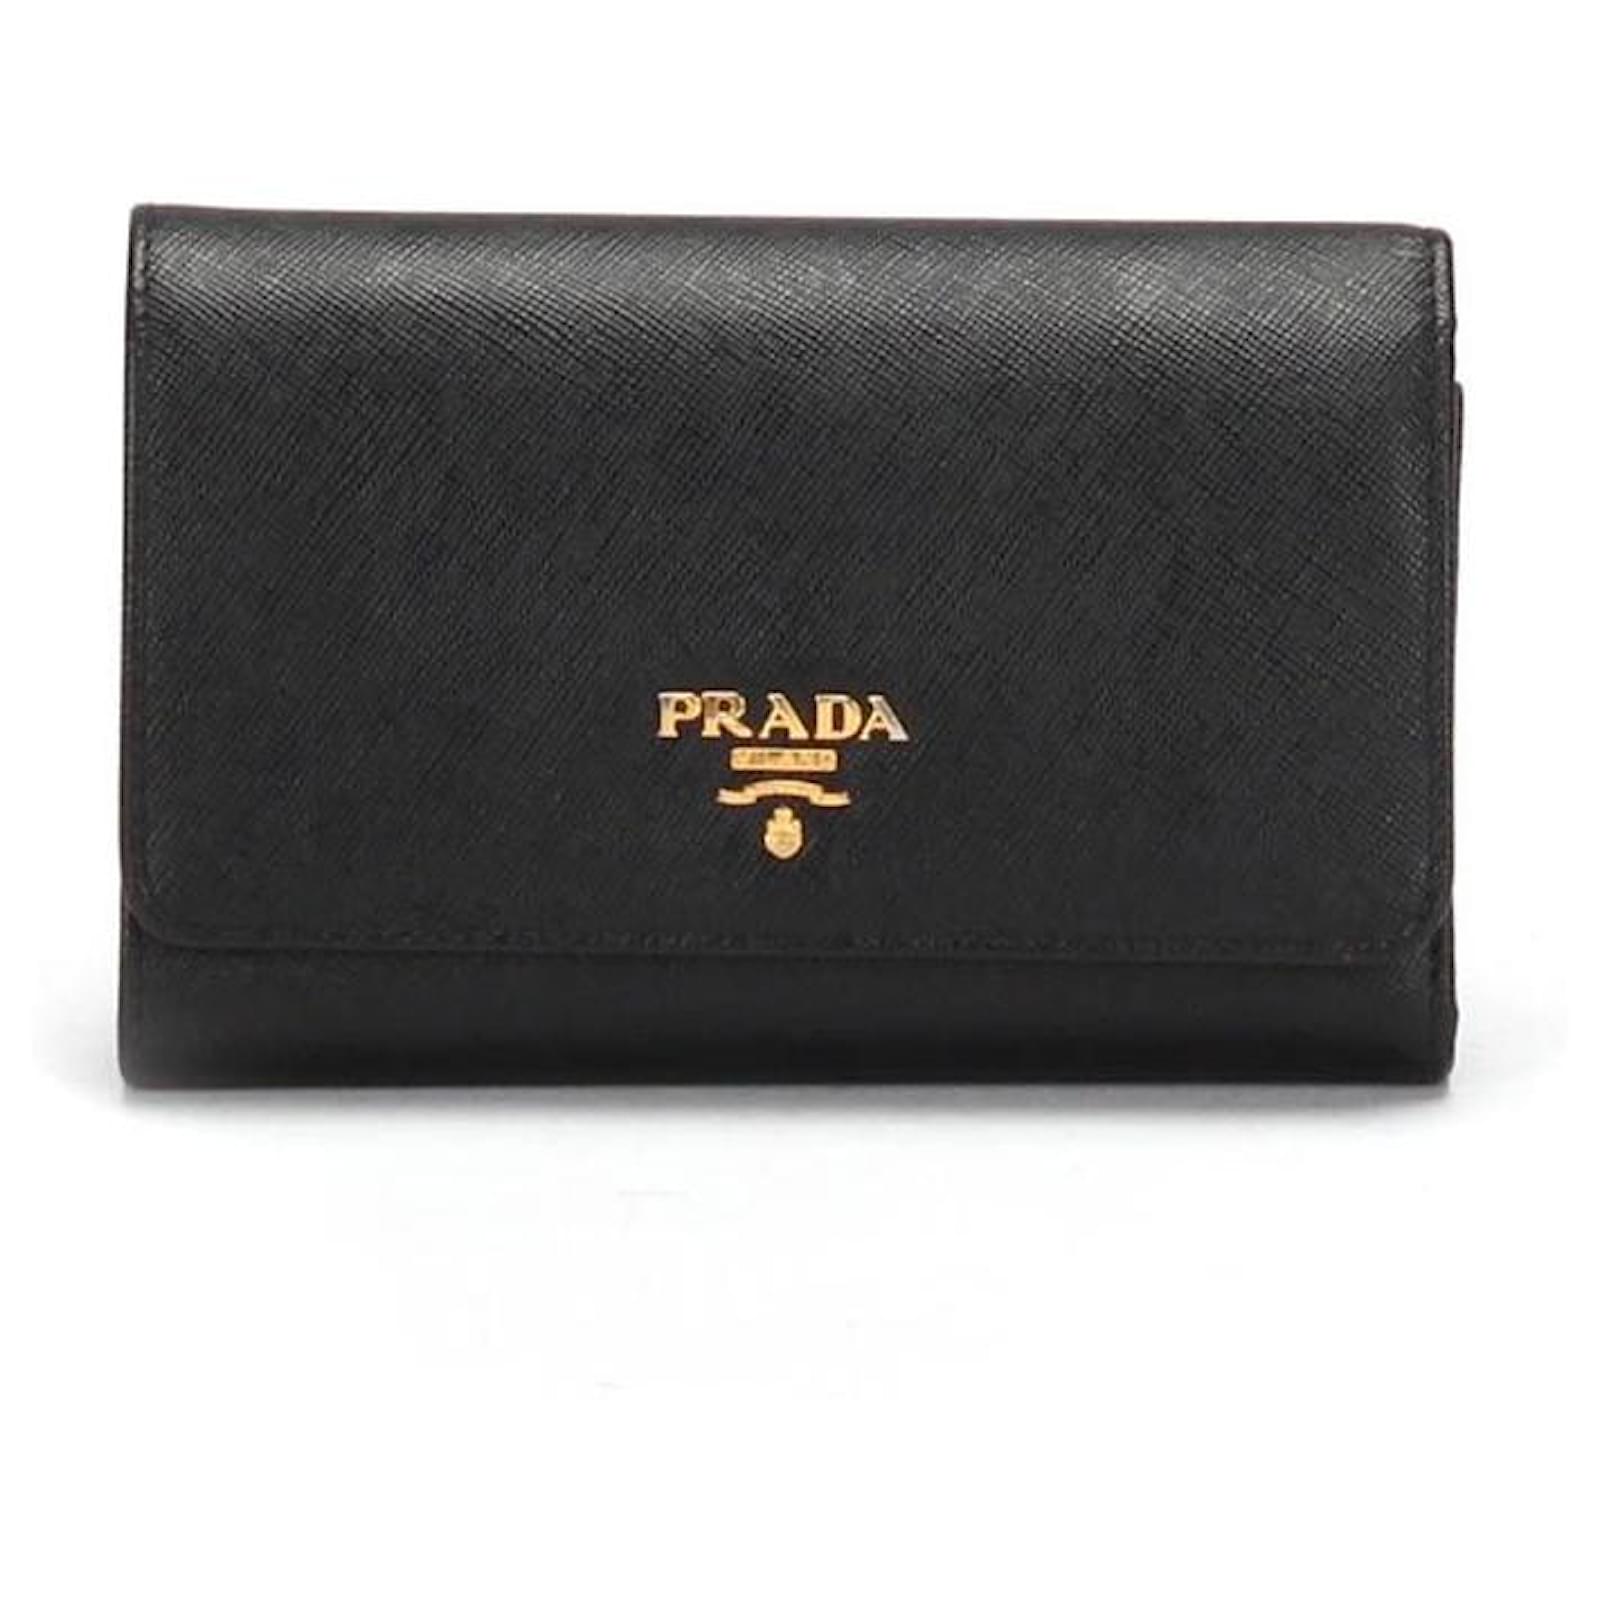 Prada Saffiano Tri-Fold Wallet in black calfskin leather Pony-style ...